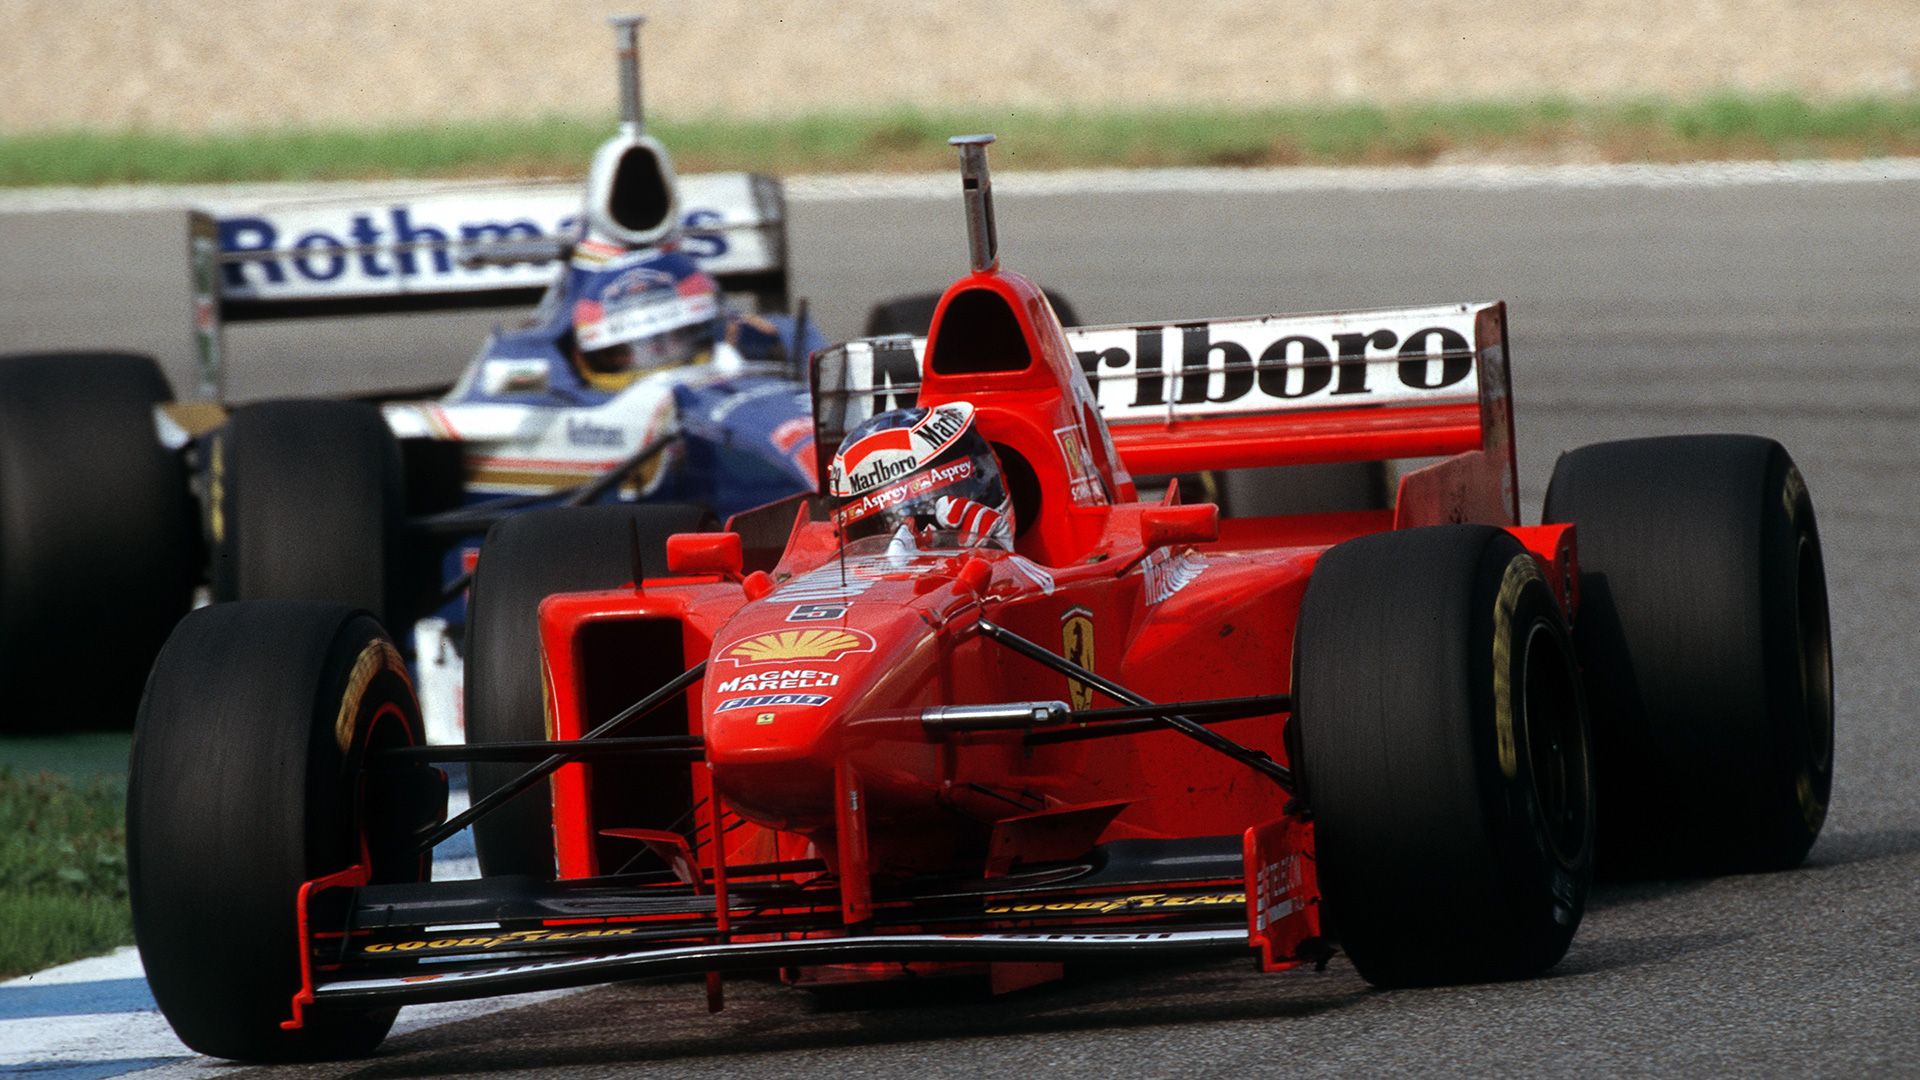 1997 European Grand Prix - Schumacher Leads Villeneuve